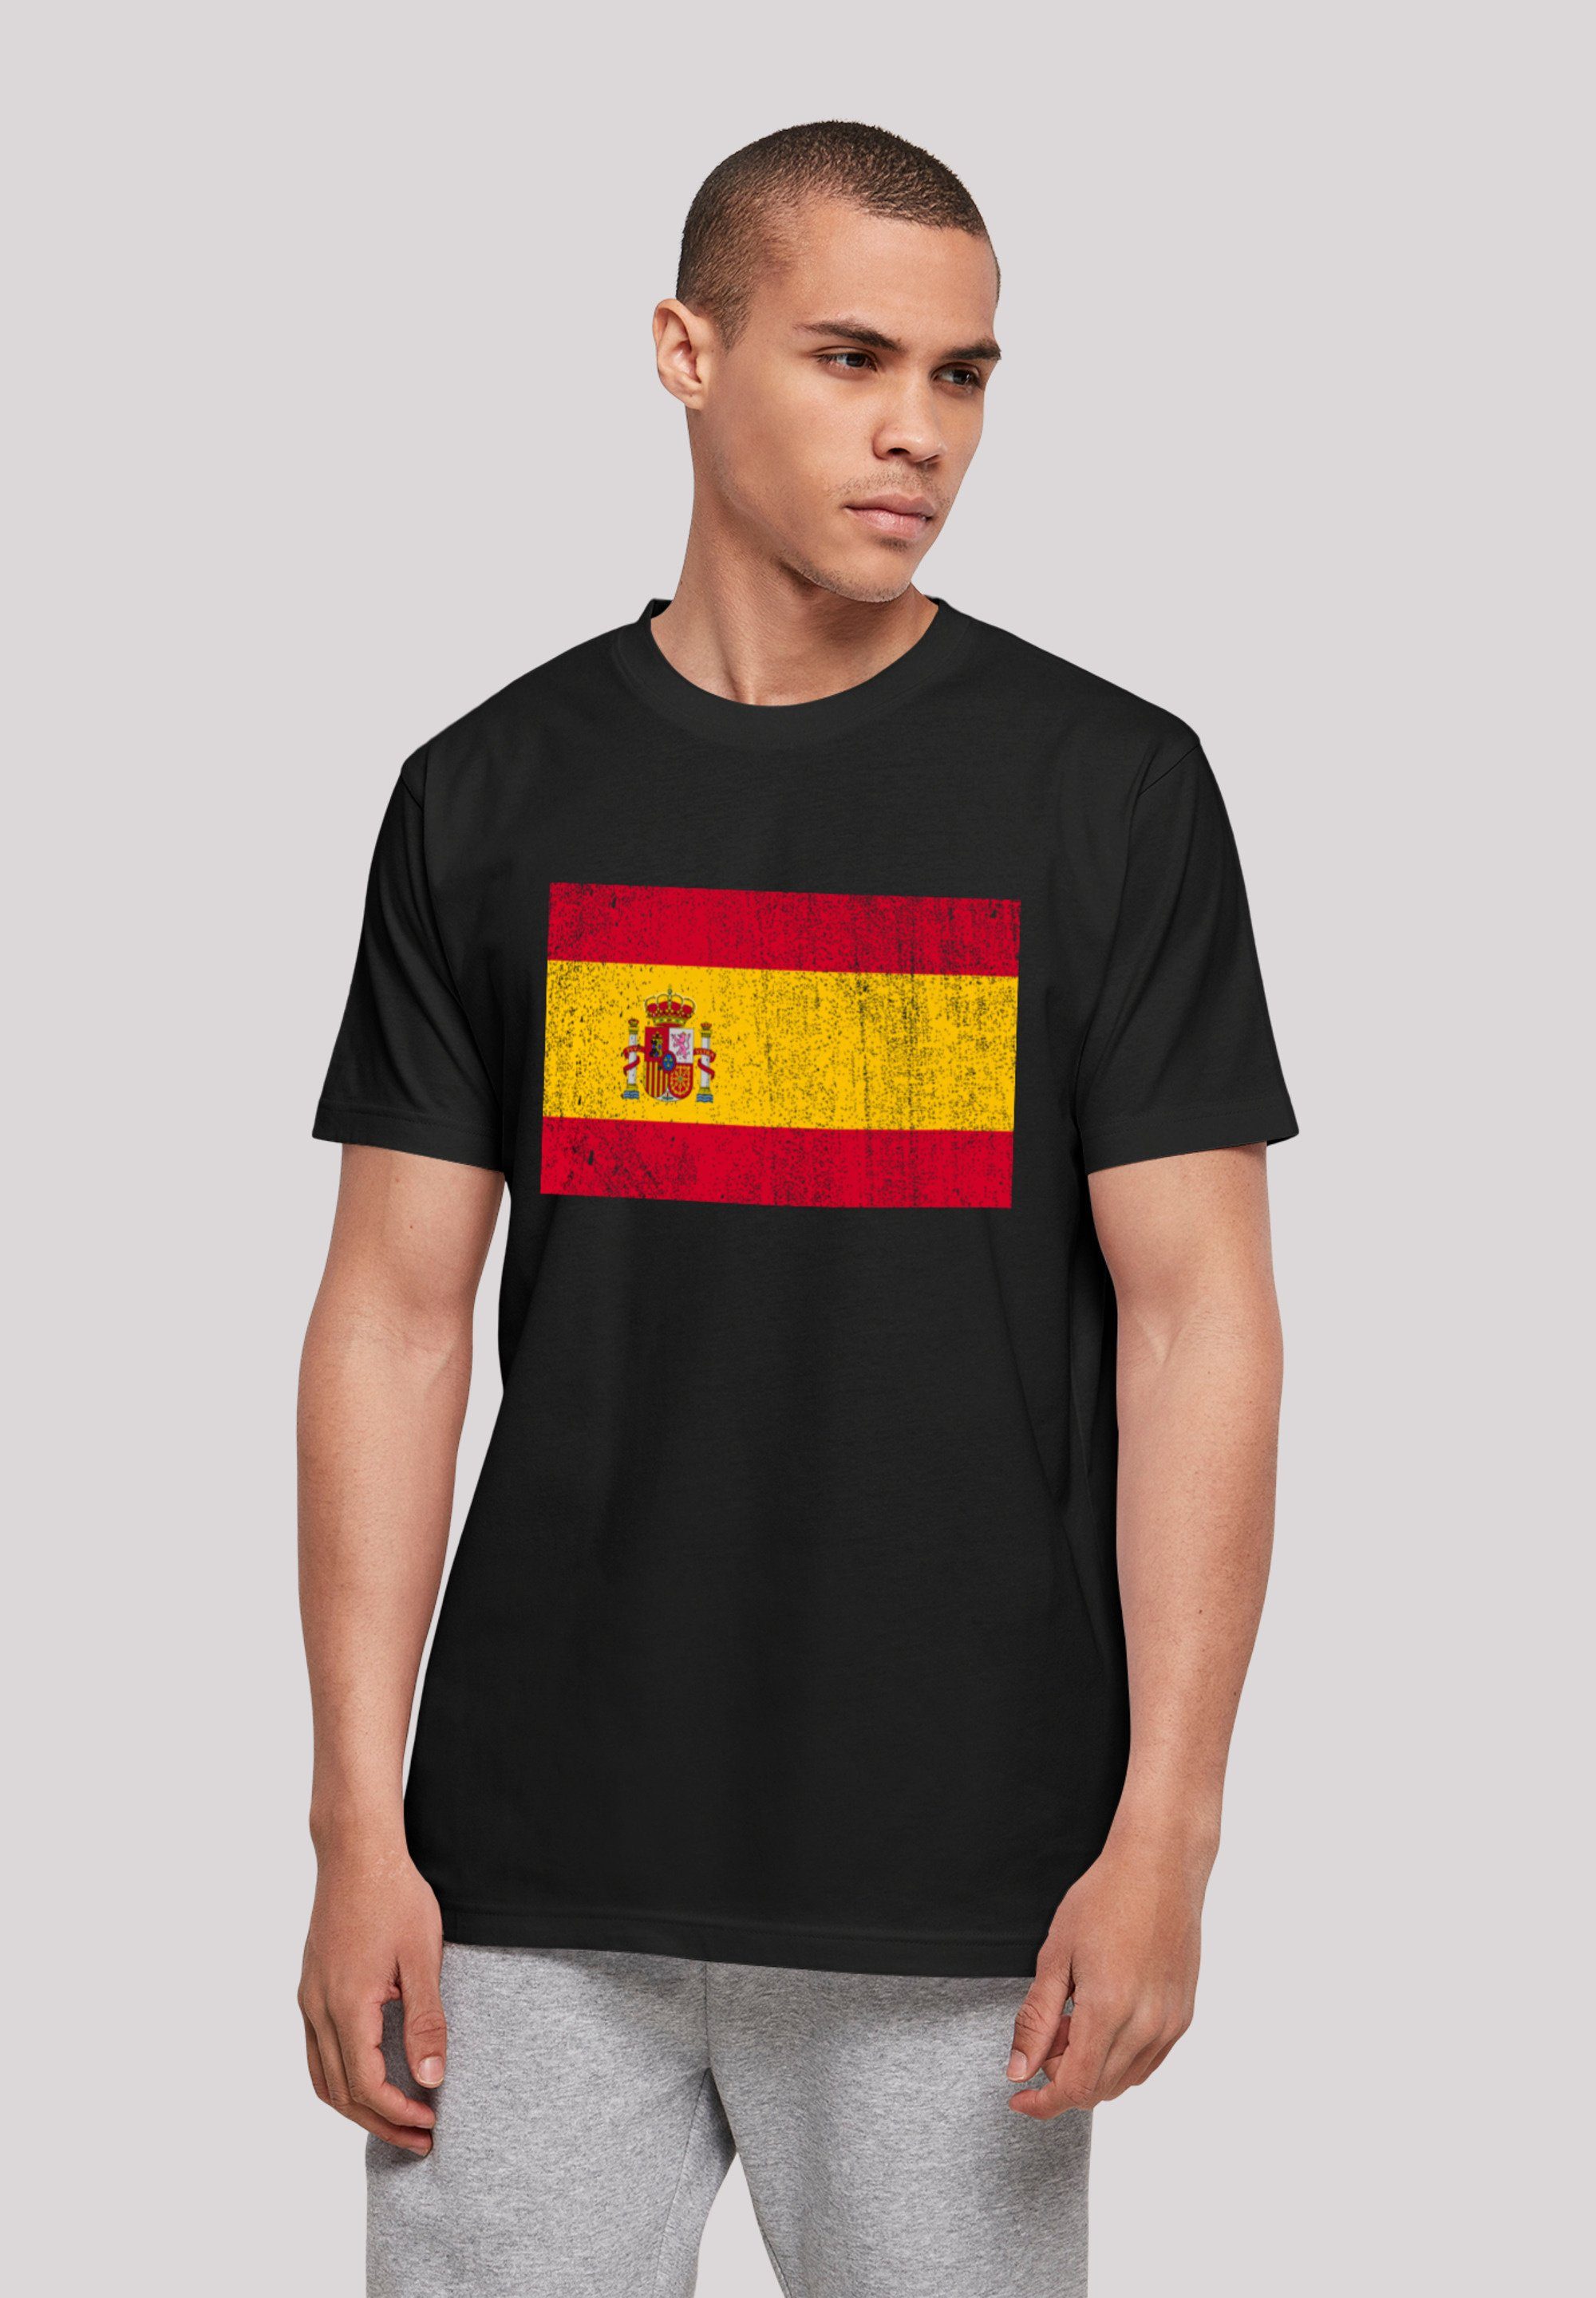 F4NT4STIC T-Shirt Spanien Flagge Spain distressed Print schwarz